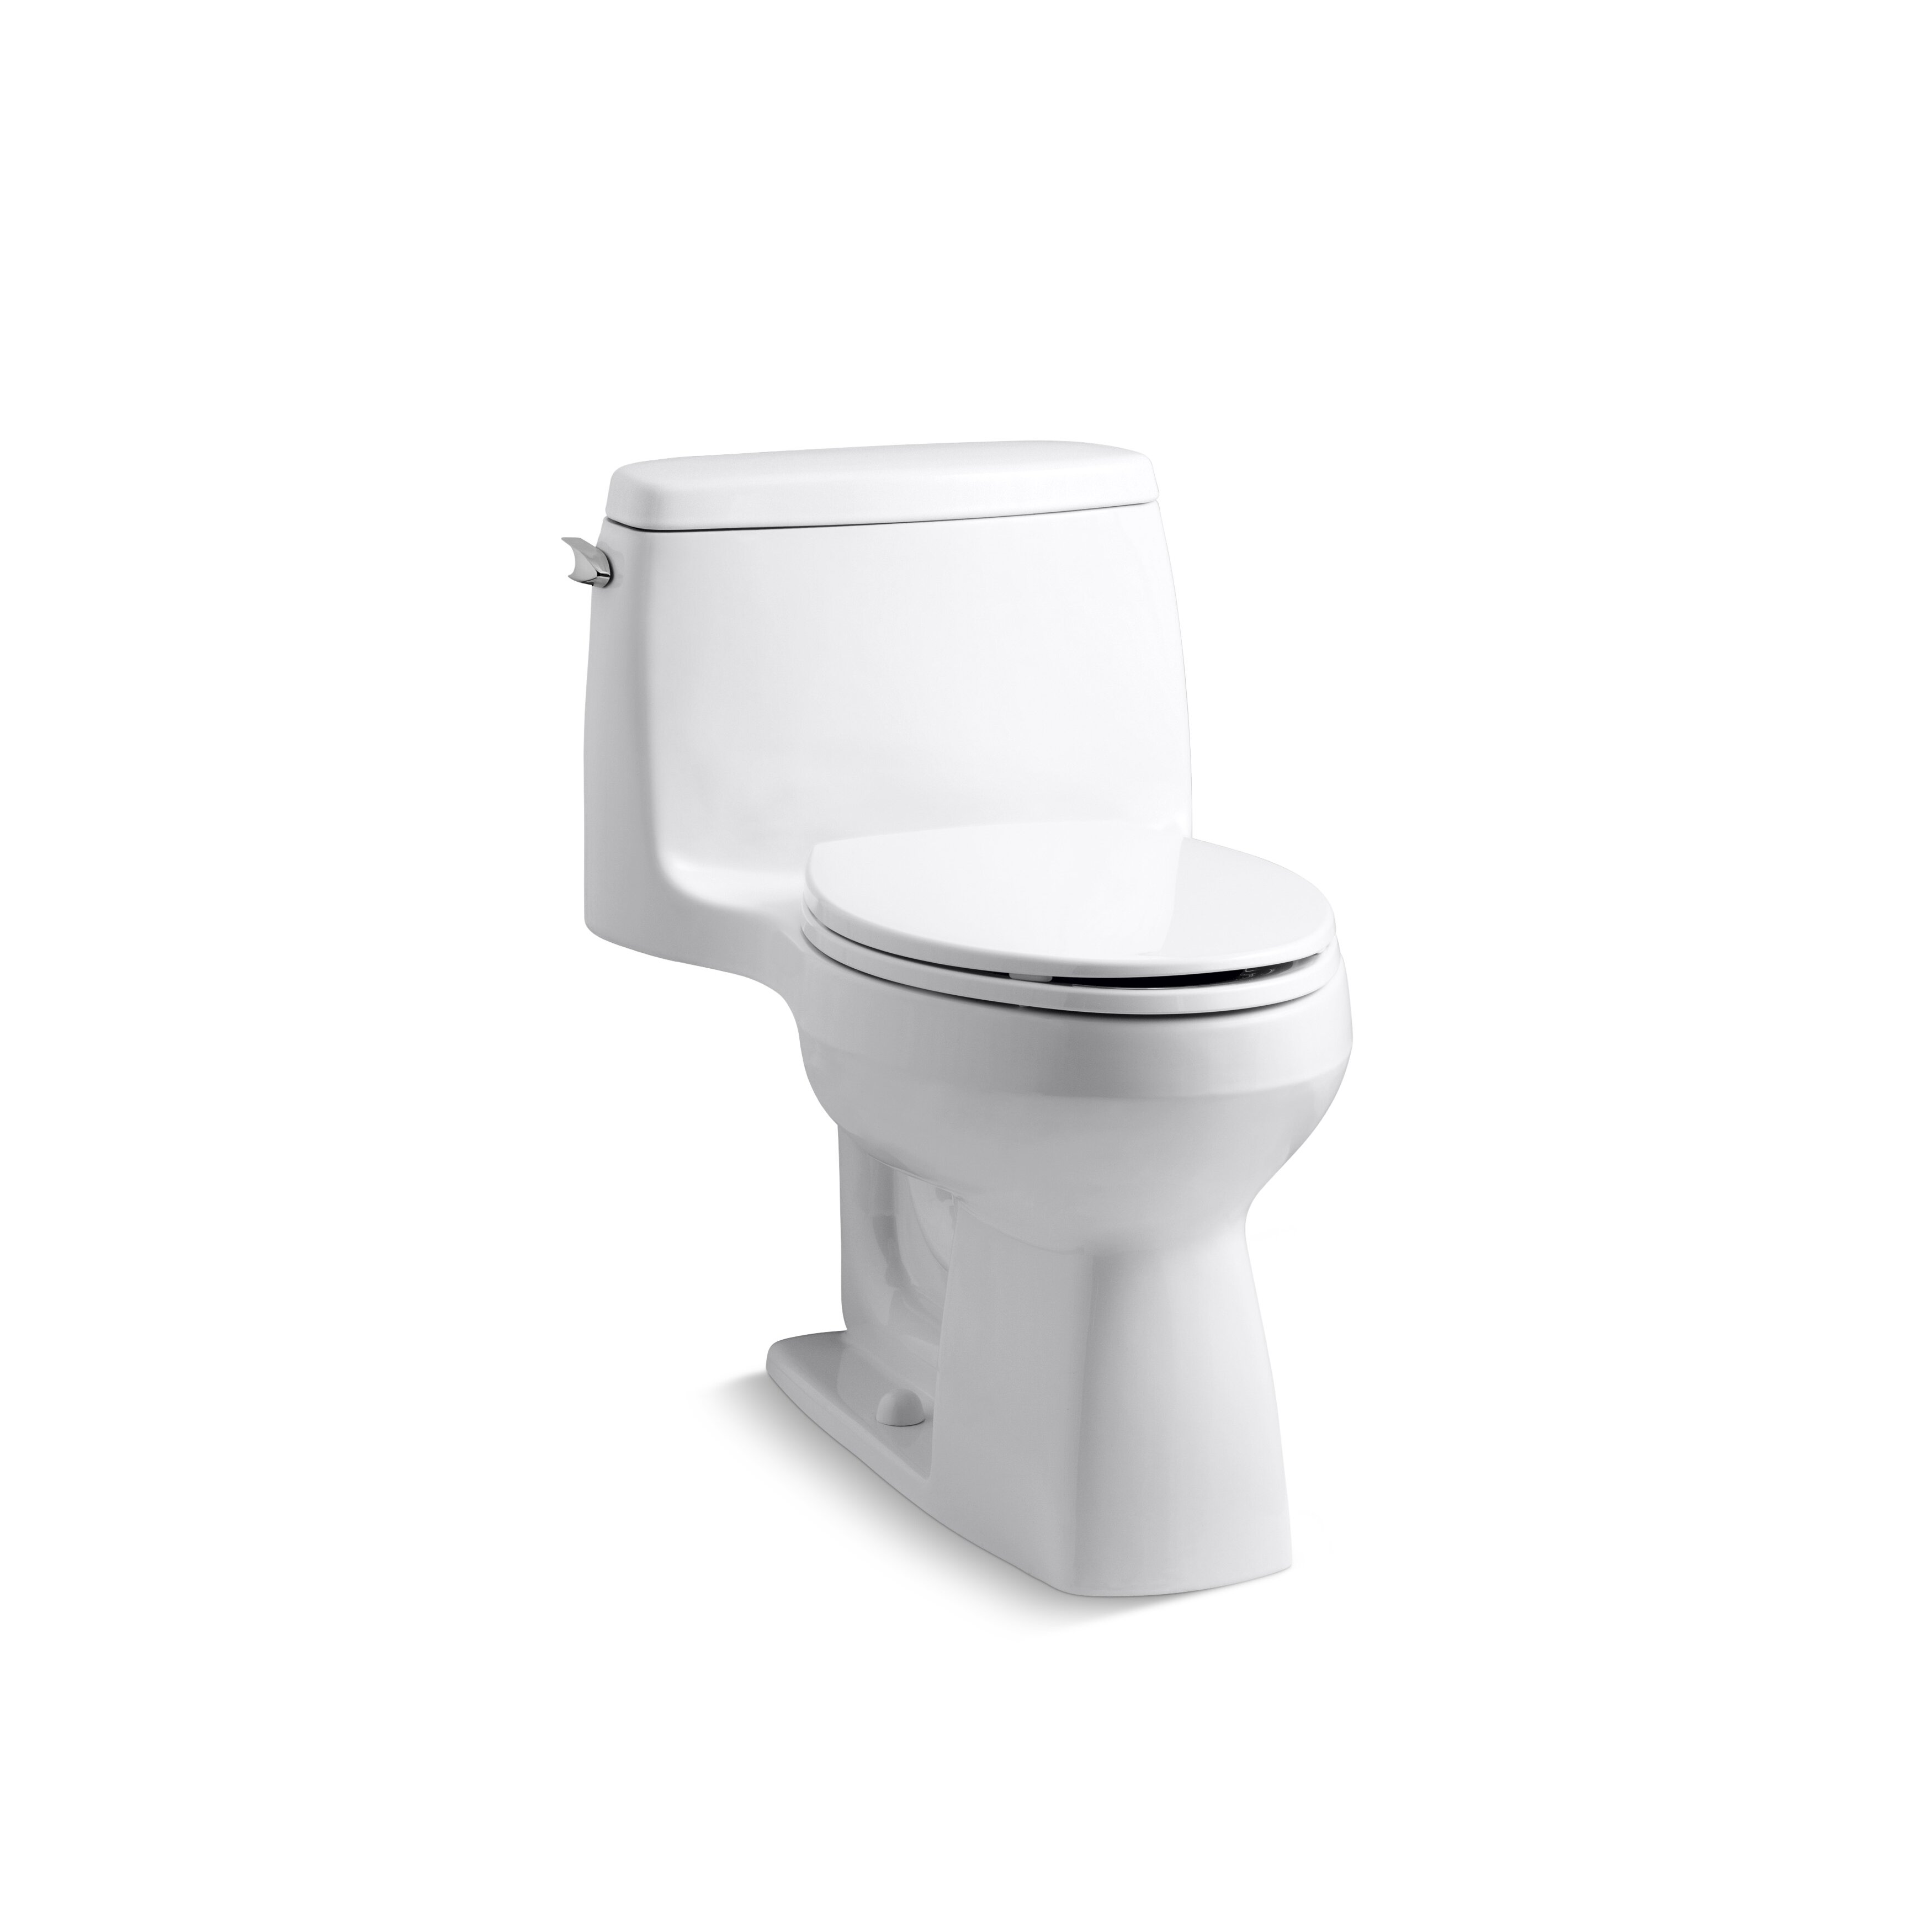 is-kohler-santa-rosa-a-good-toilet-cnb-solutions